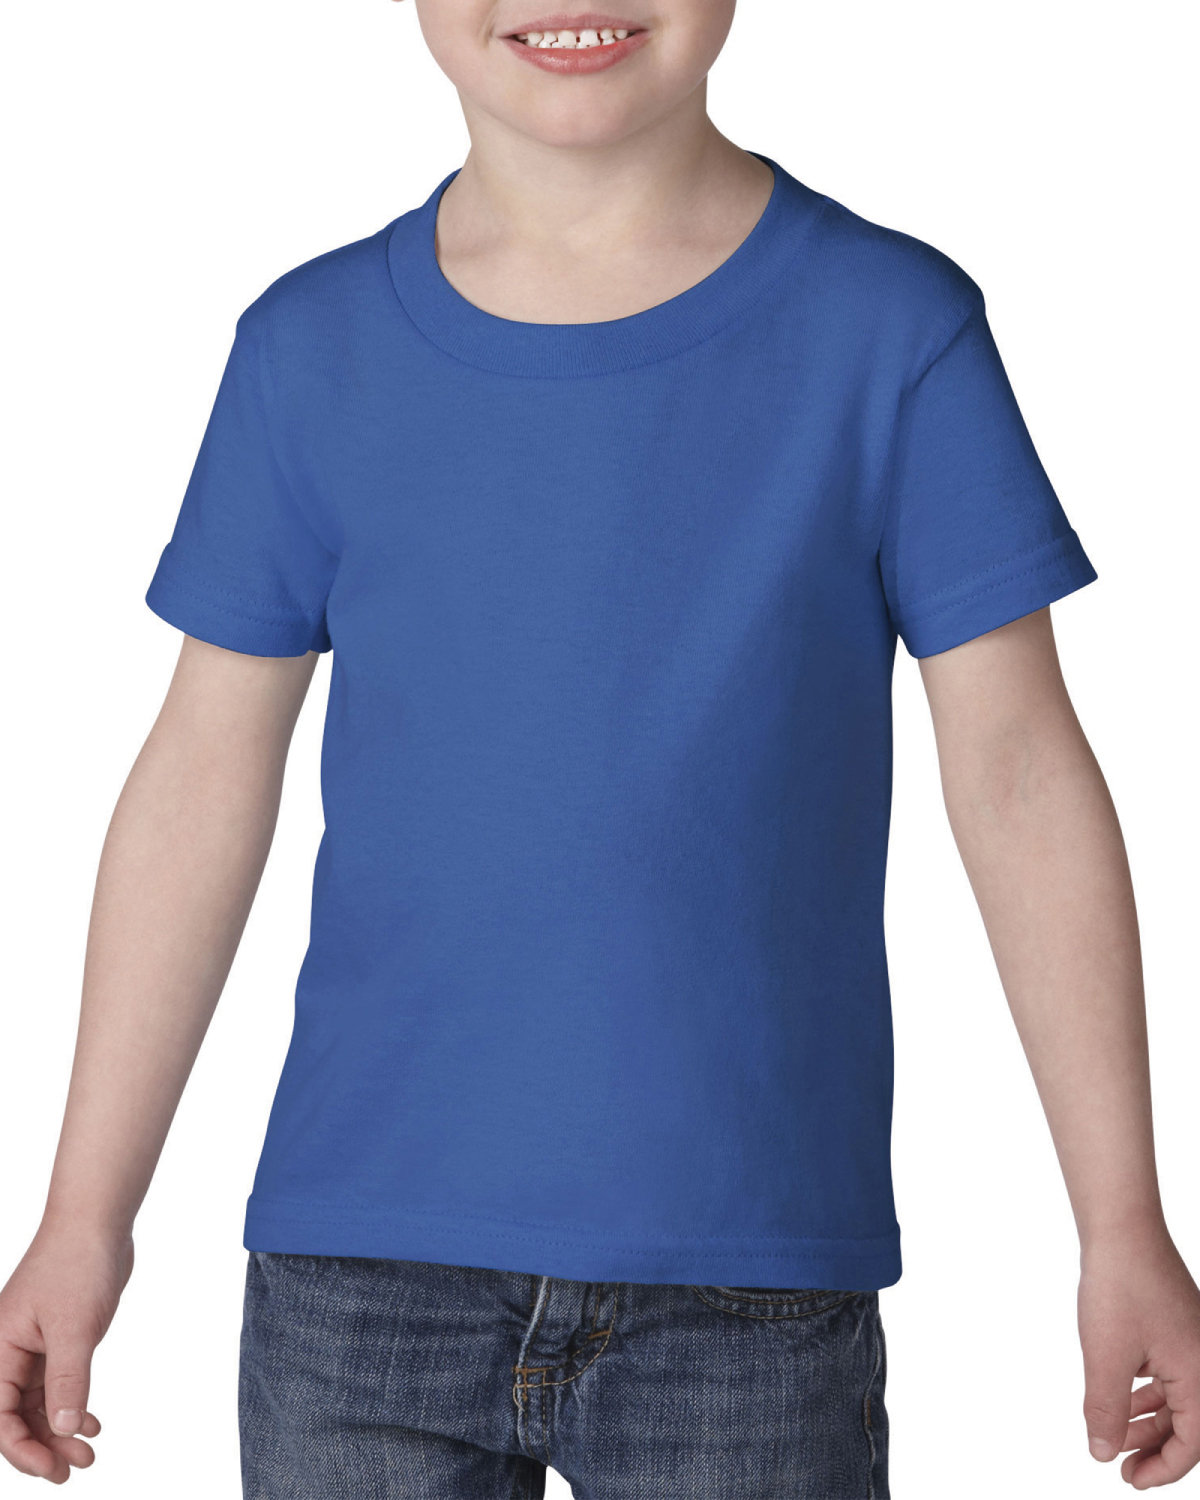 Junior Allover Gcds Cotton Shirt: Boy Shirts Blue